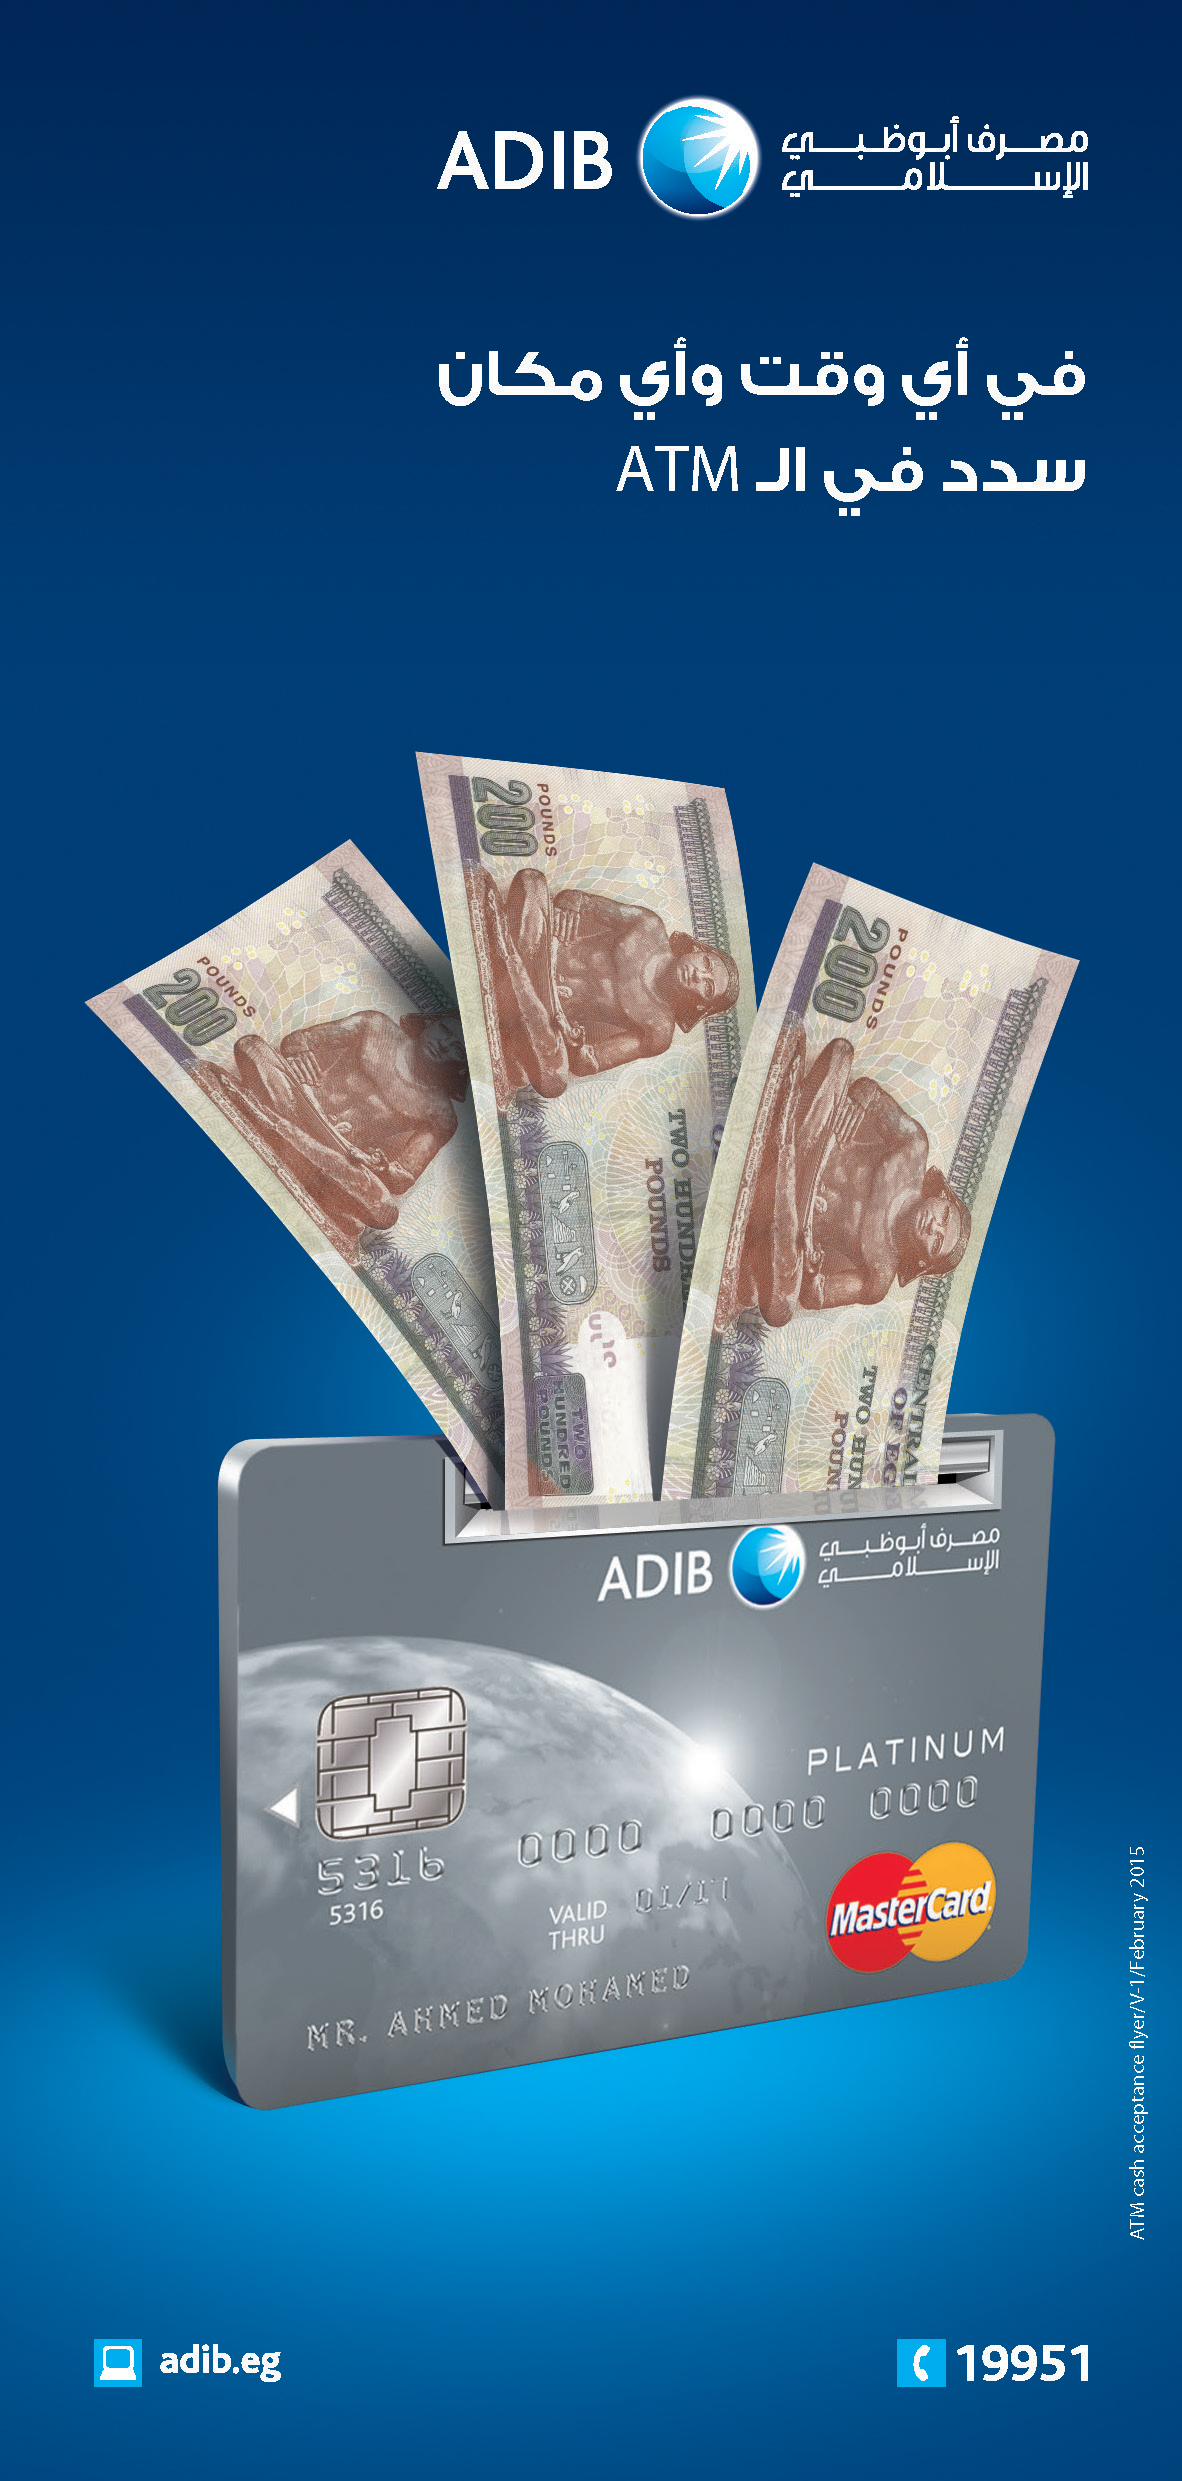 adib Bank egypt mostafa mahmoud